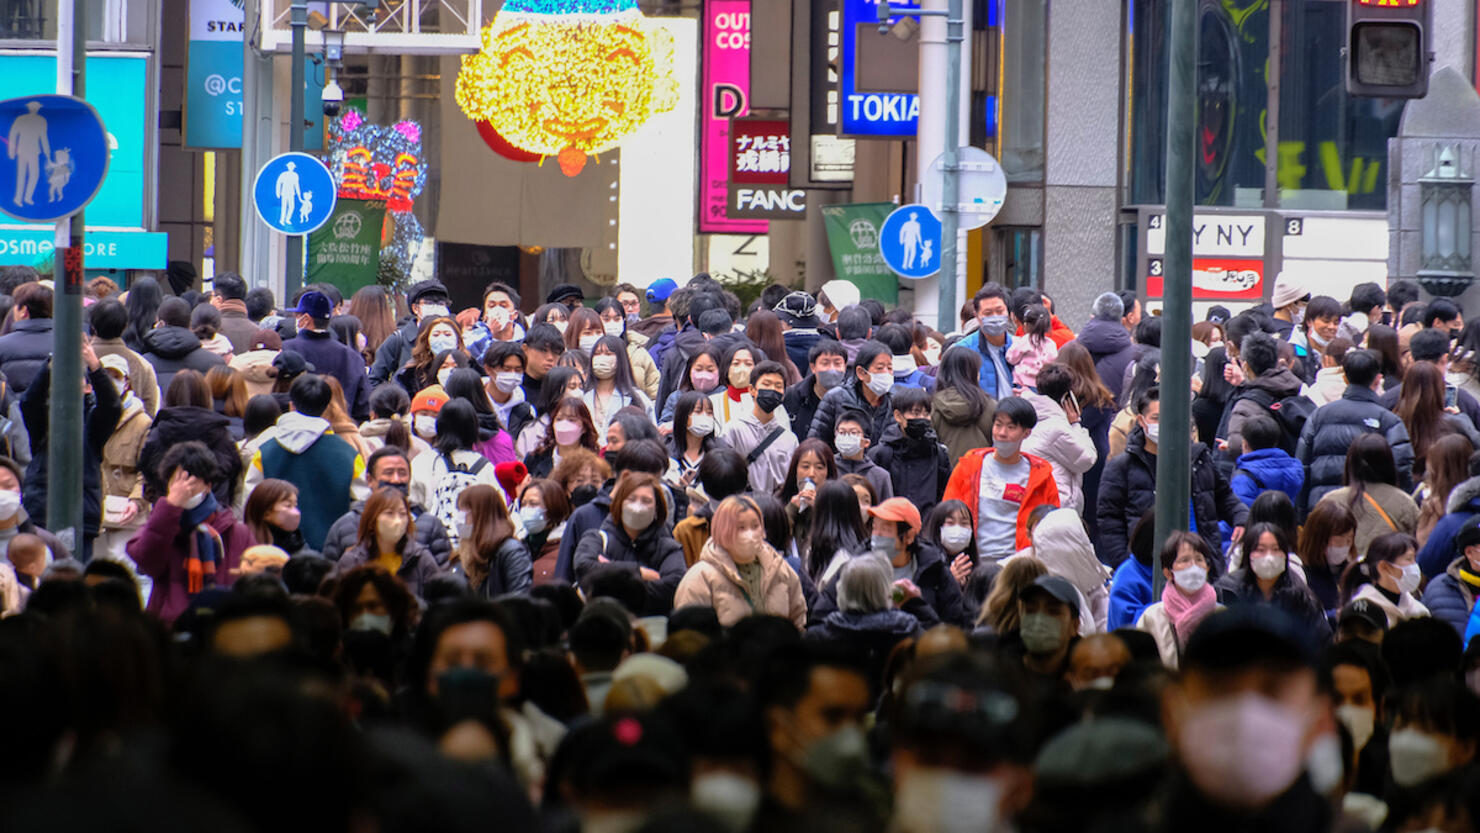 People shop along the streets of Shinsaibashi in Osaka,